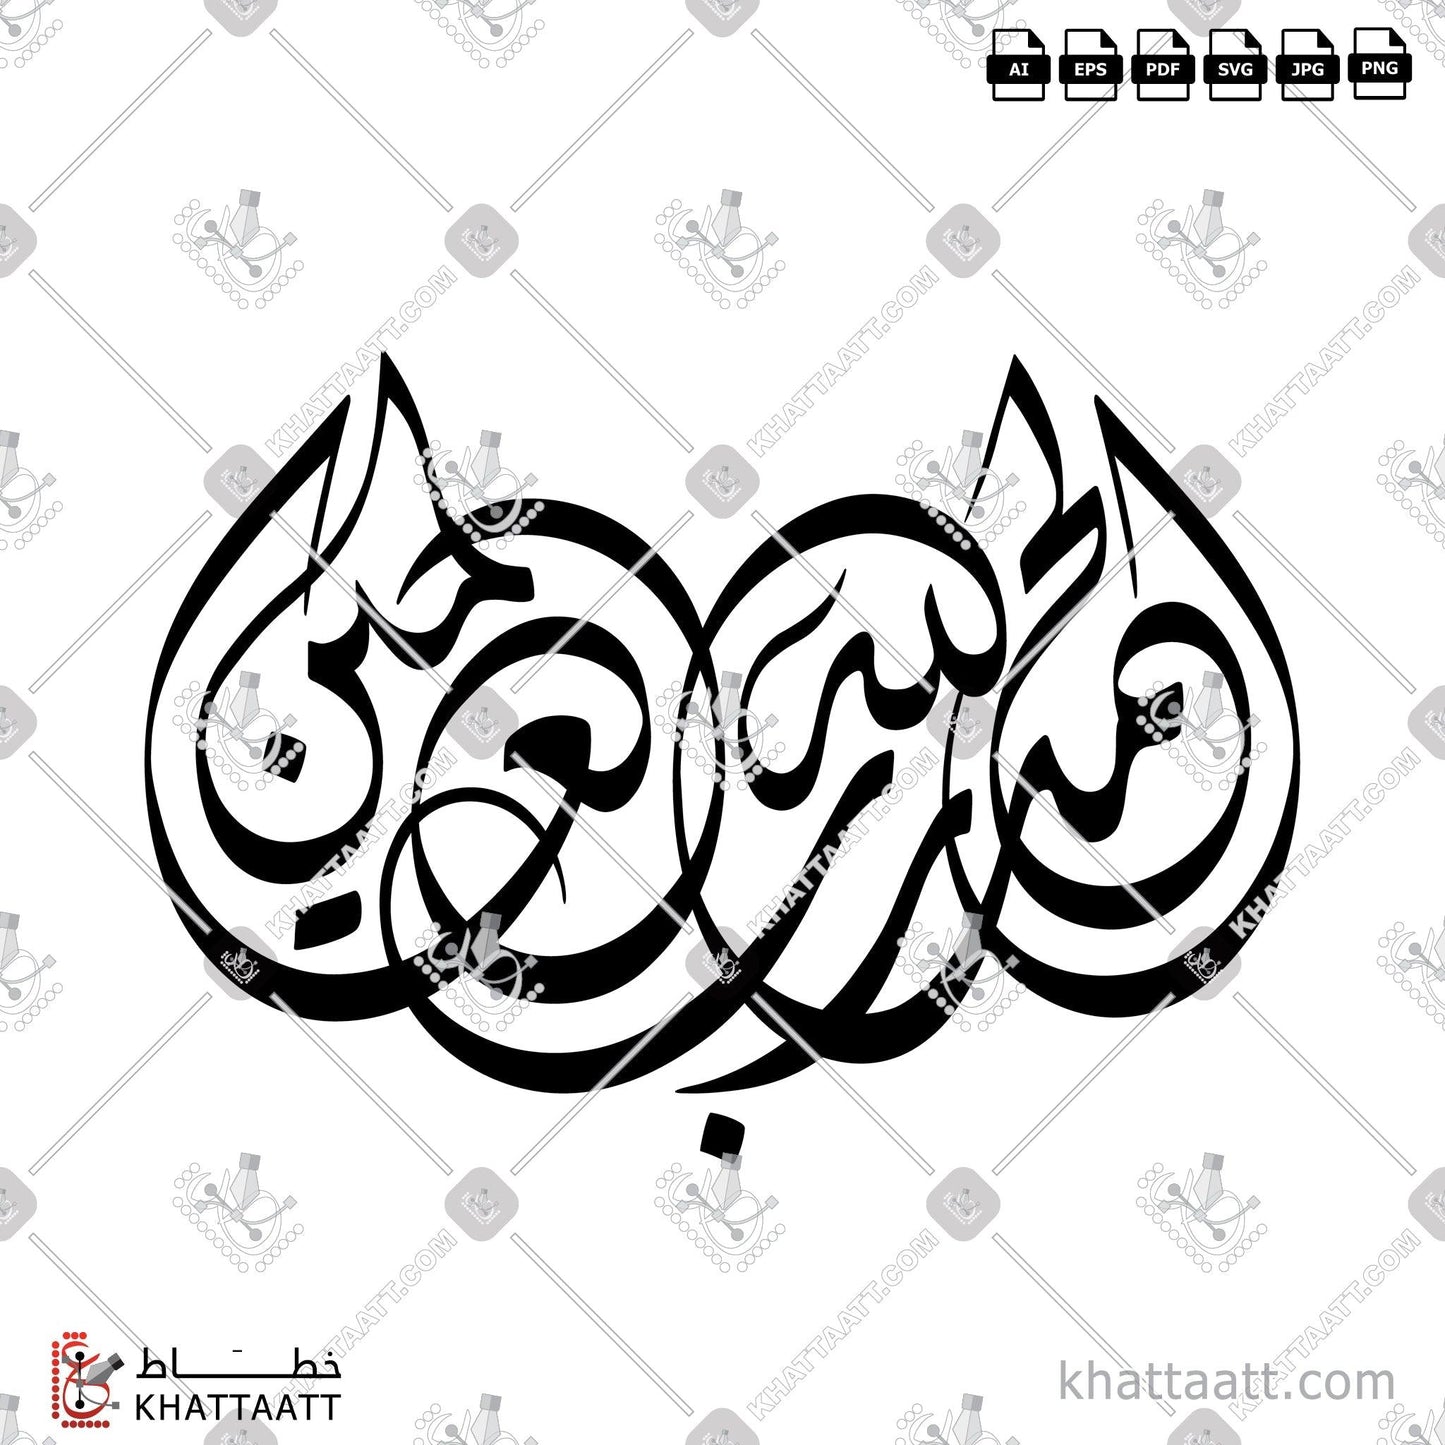 Download Arabic Calligraphy of الحمد لله رب العالمين in Diwani - الخط الديواني in vector and .png